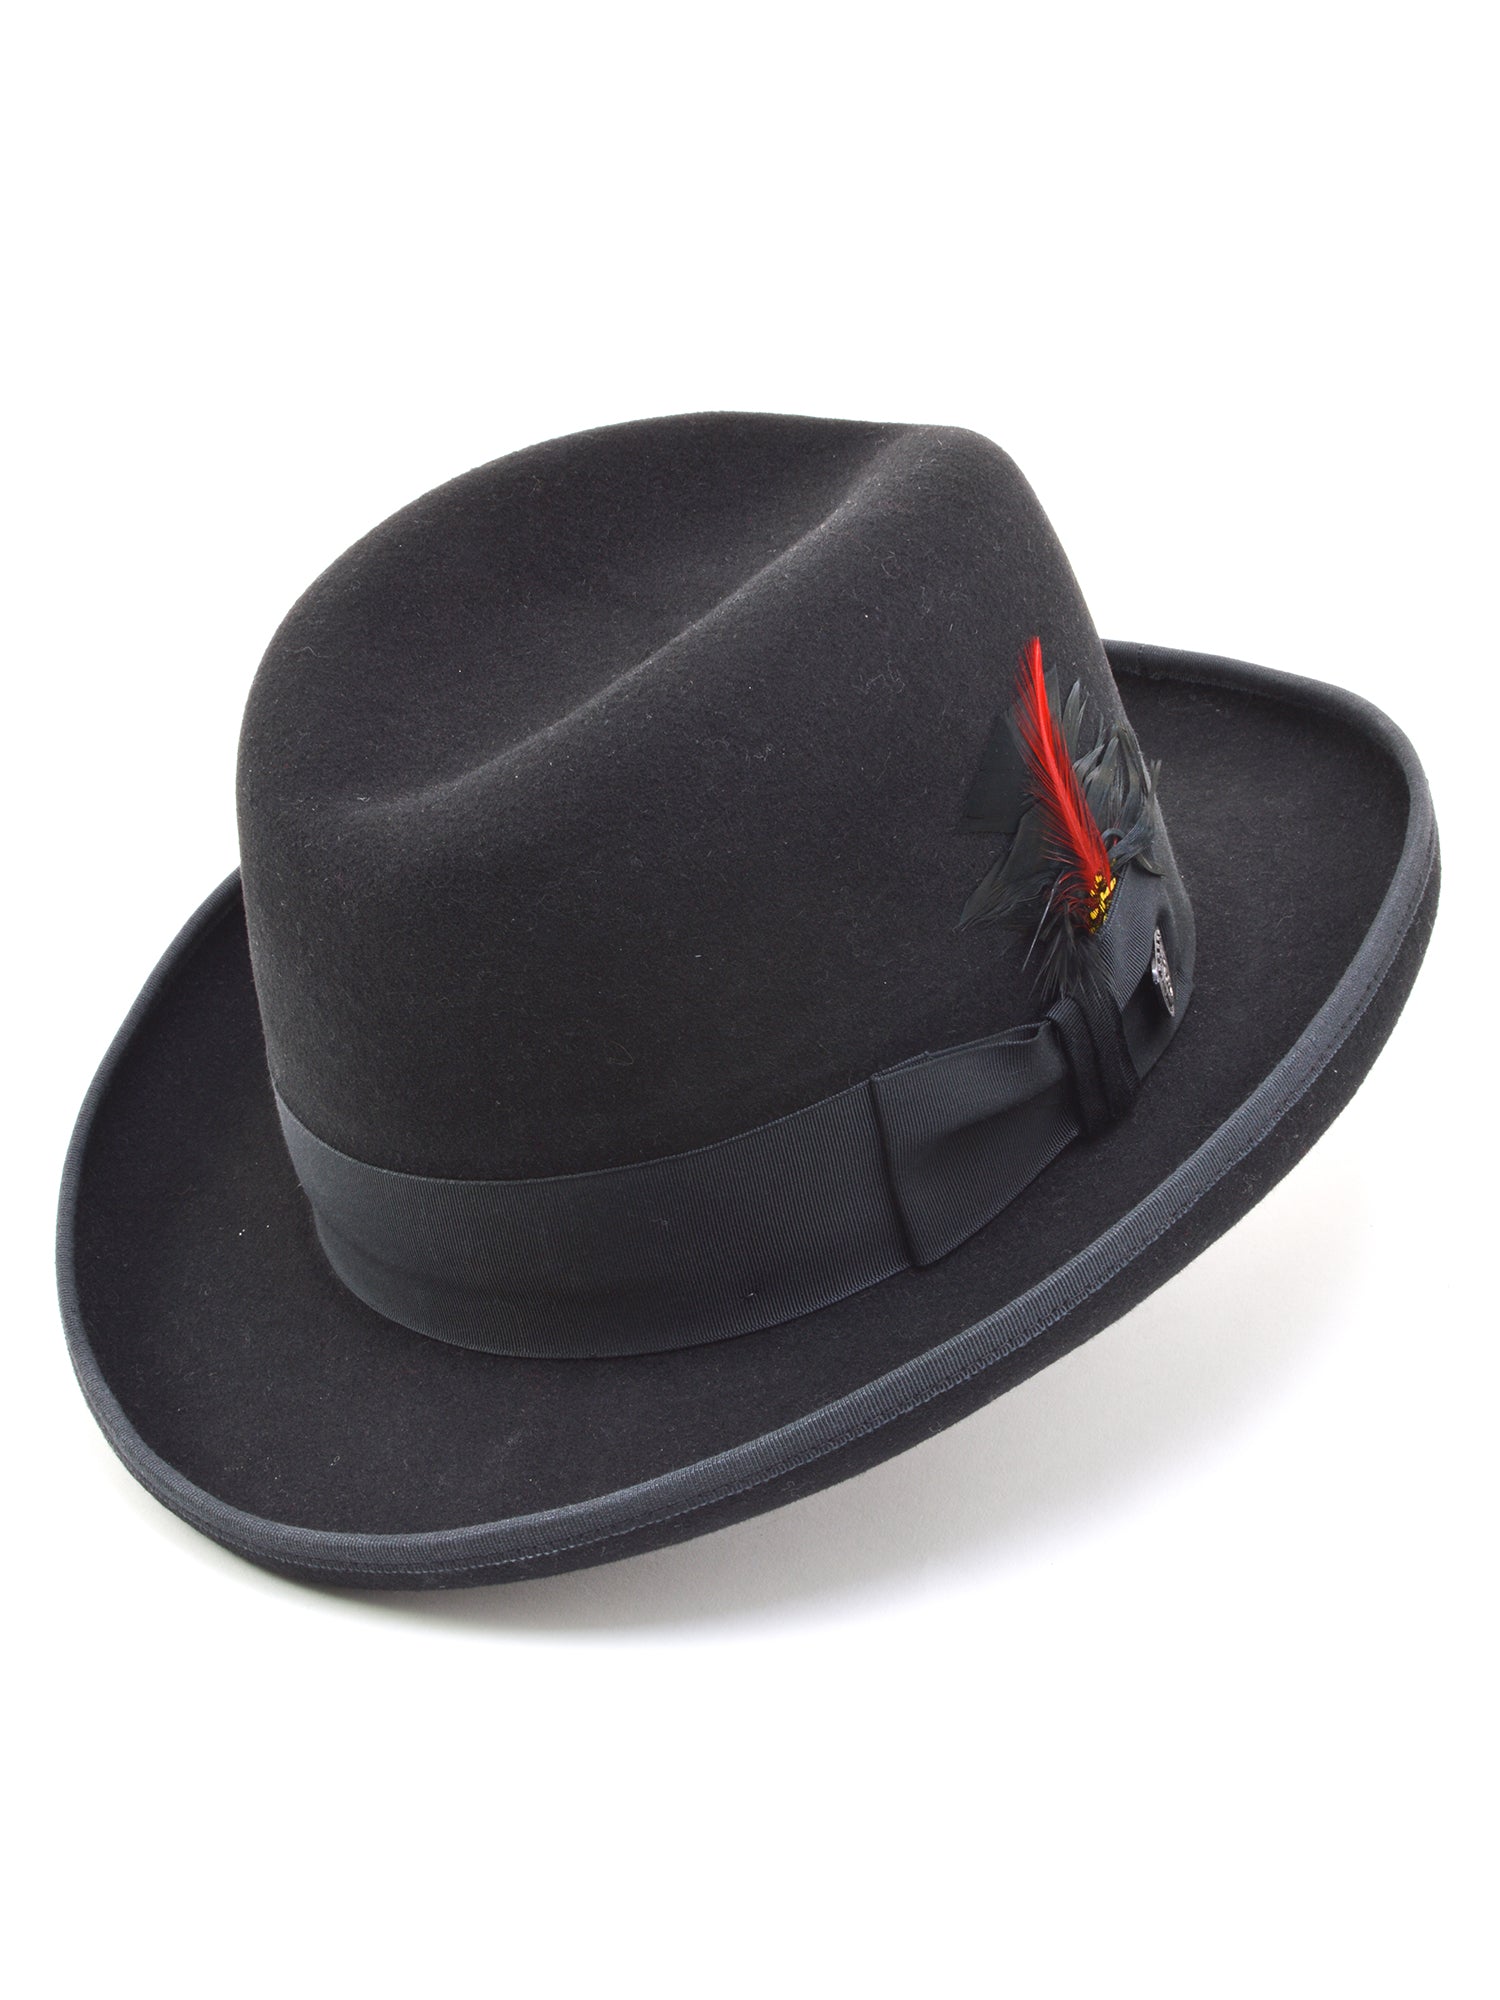 Dobbs 100% Wool Felt Fleetwood Hats in Black